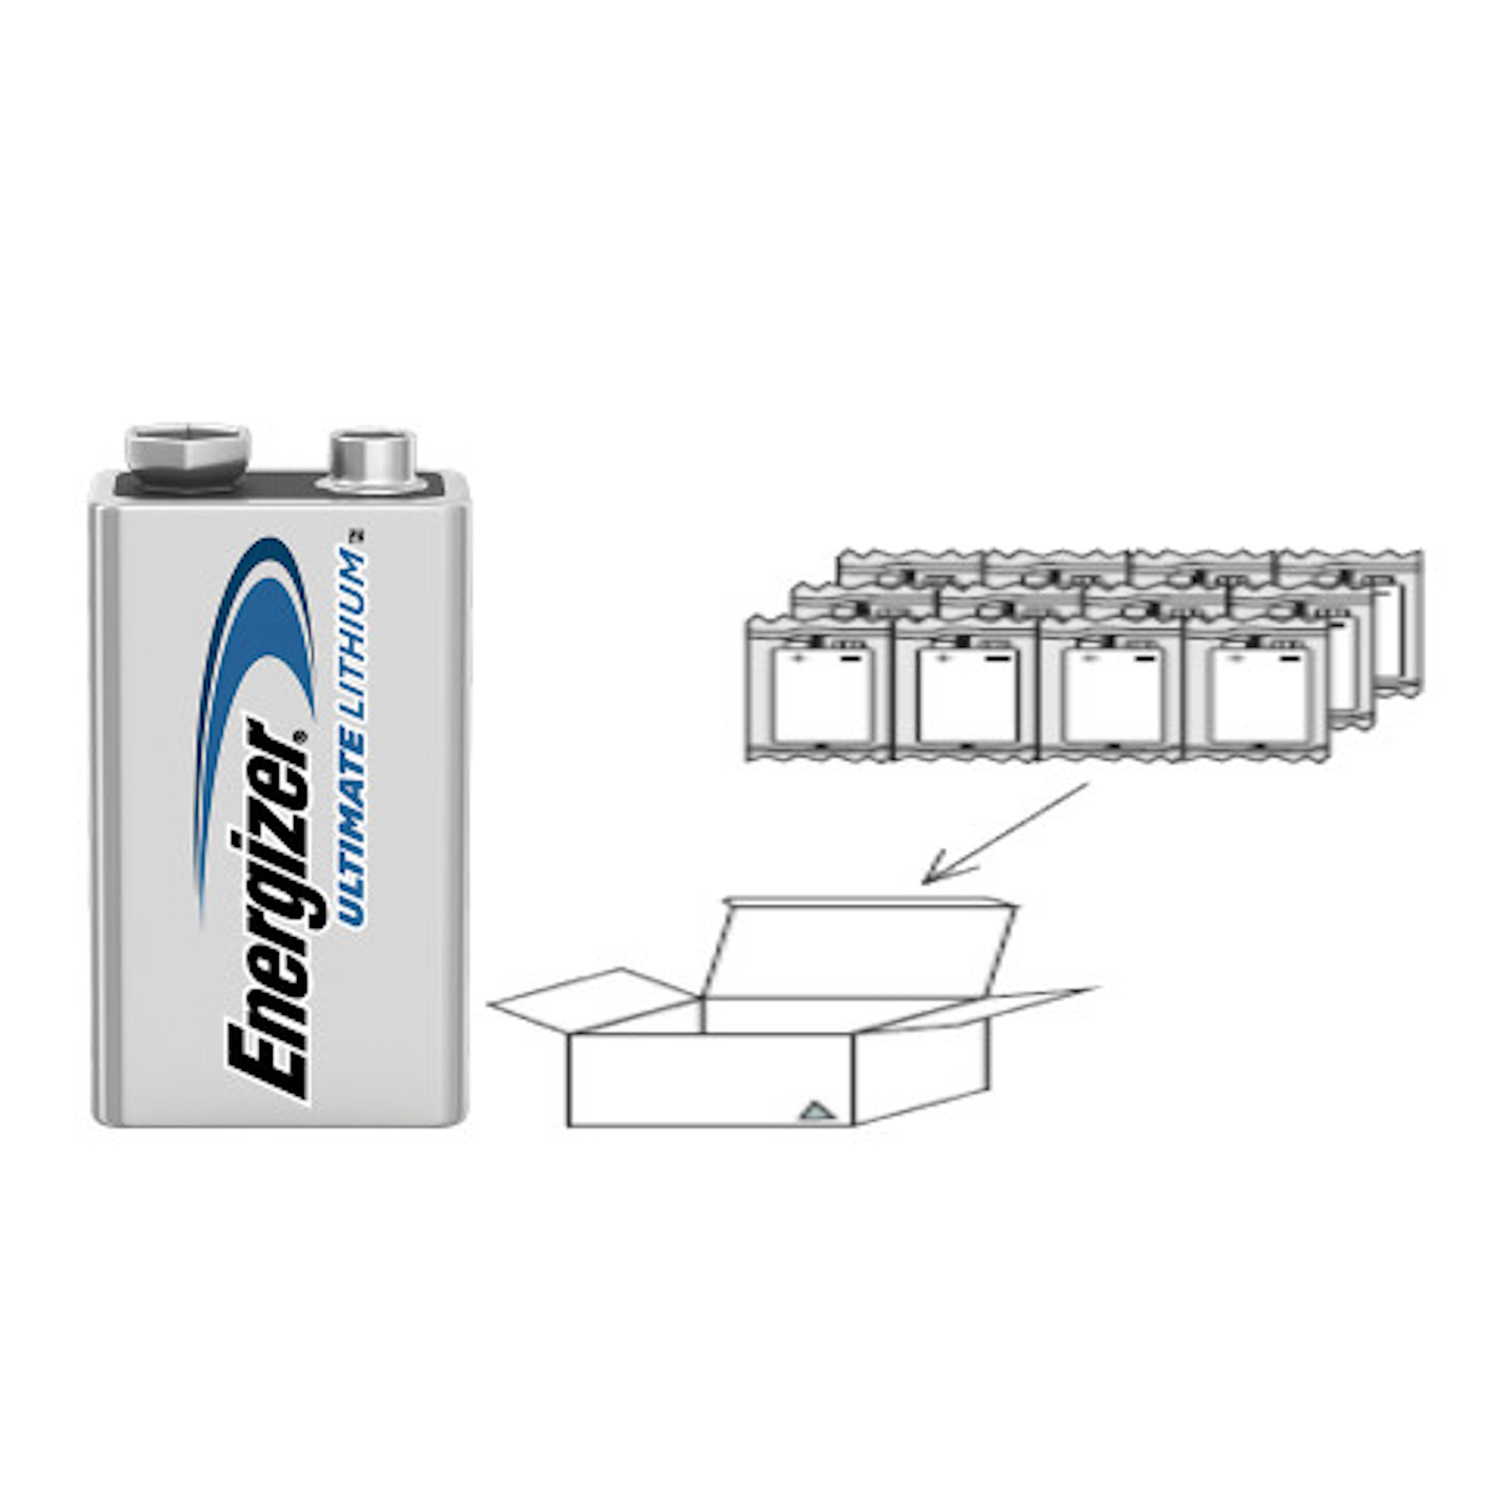 Photos - Circuit Breaker Energizer Ultimate Lithium 9-Volt 1000 mAh Battery 12 pk L522 